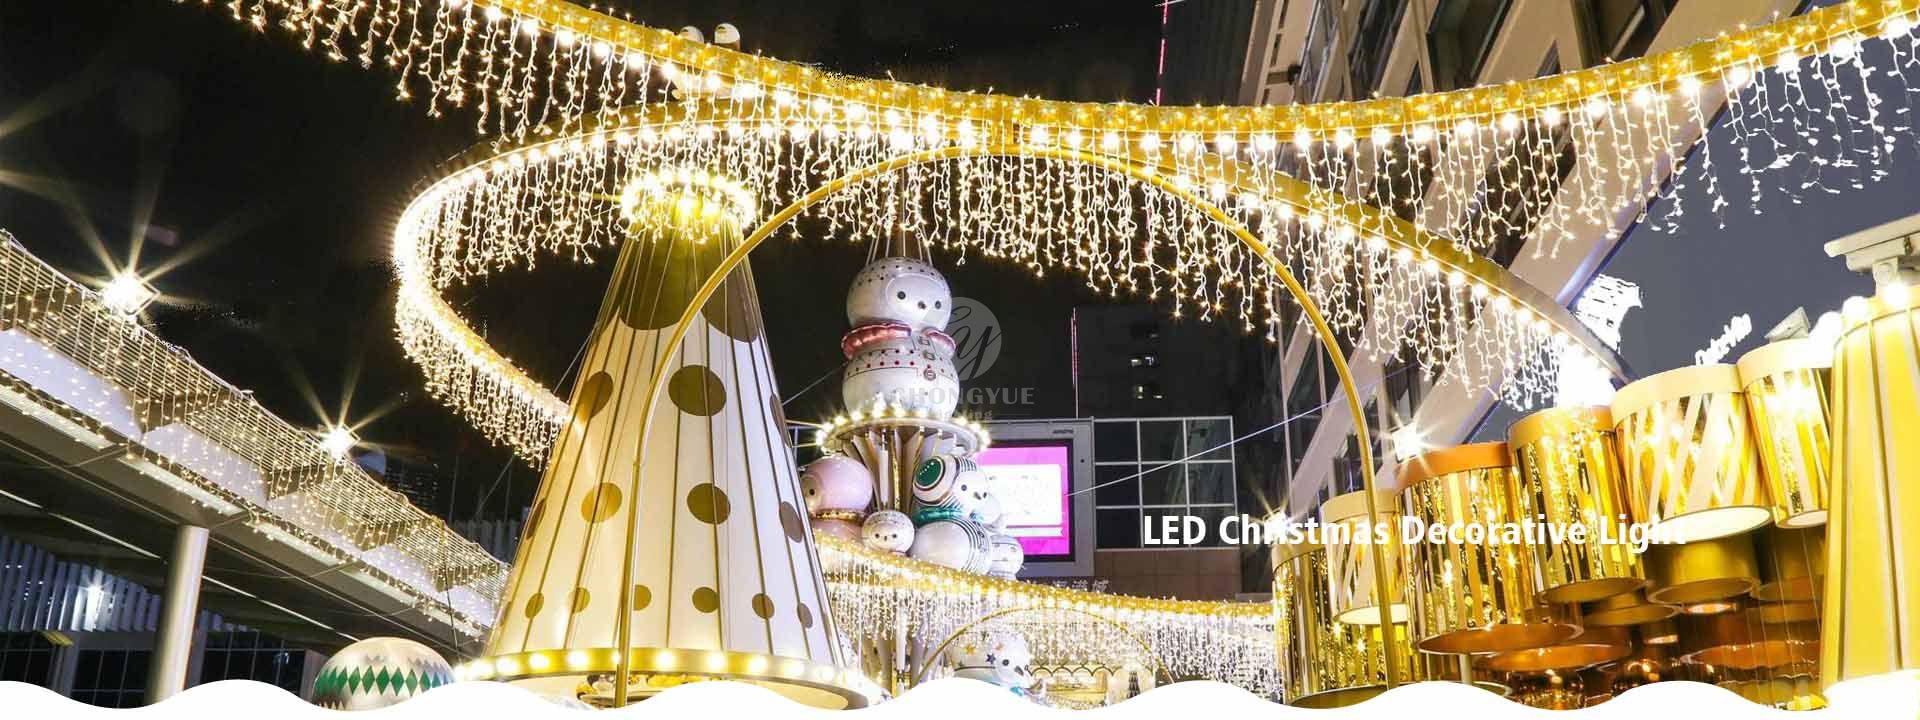 led-christmas-decorative-light